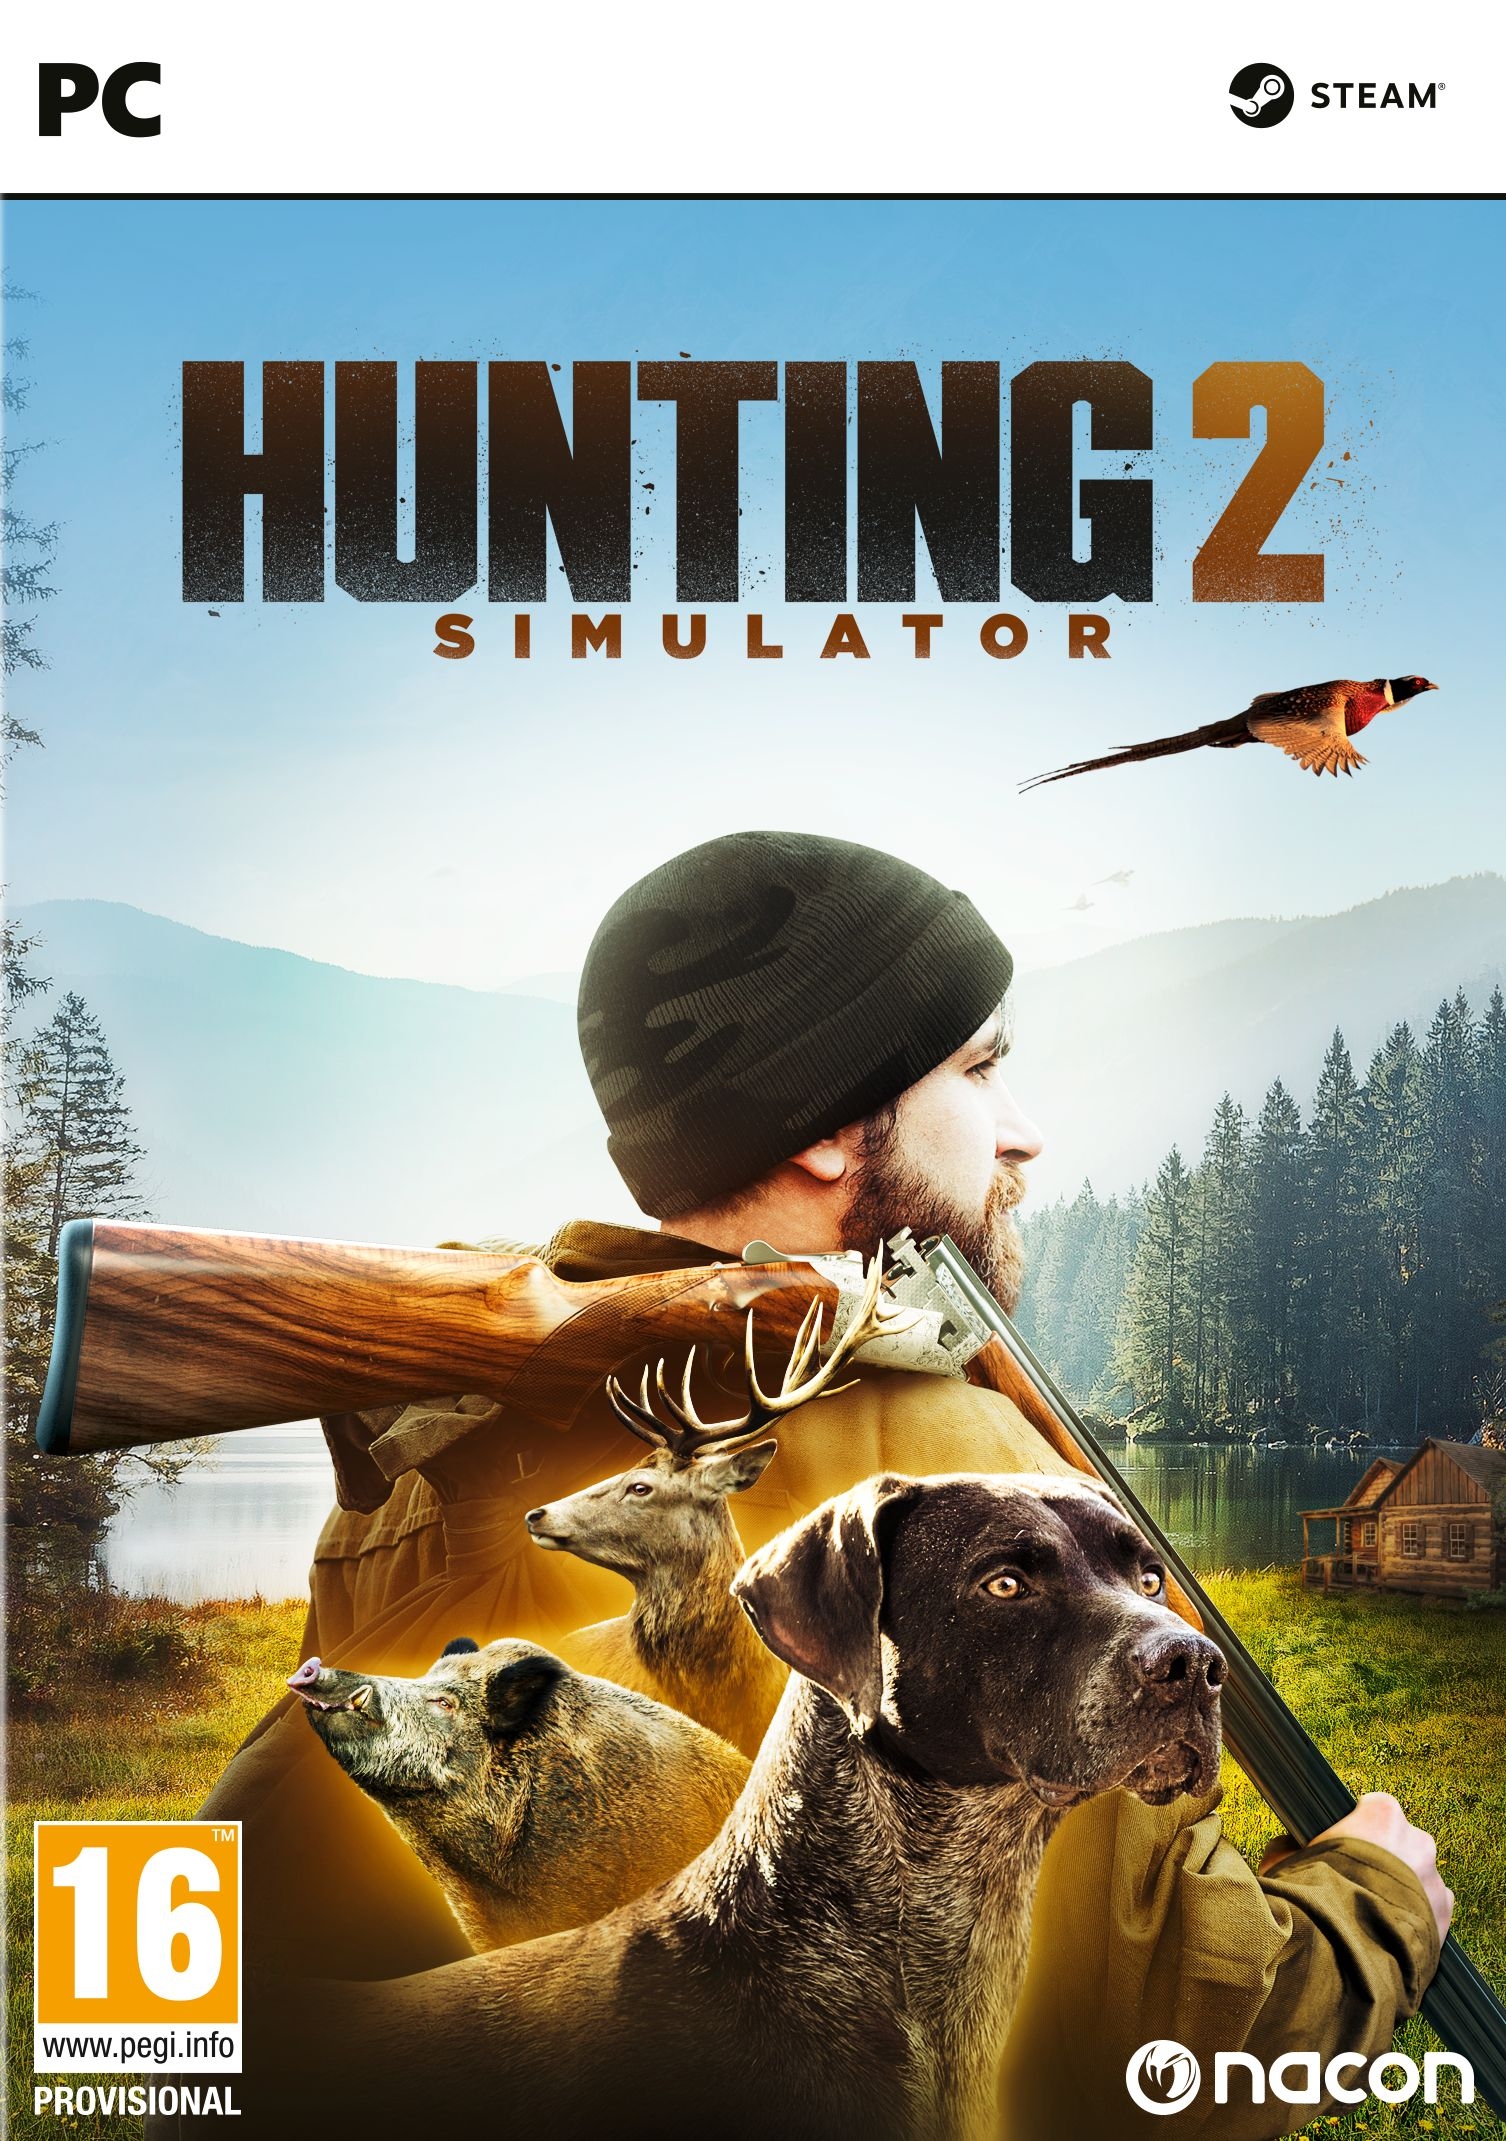 PC Hunting Simulator 2